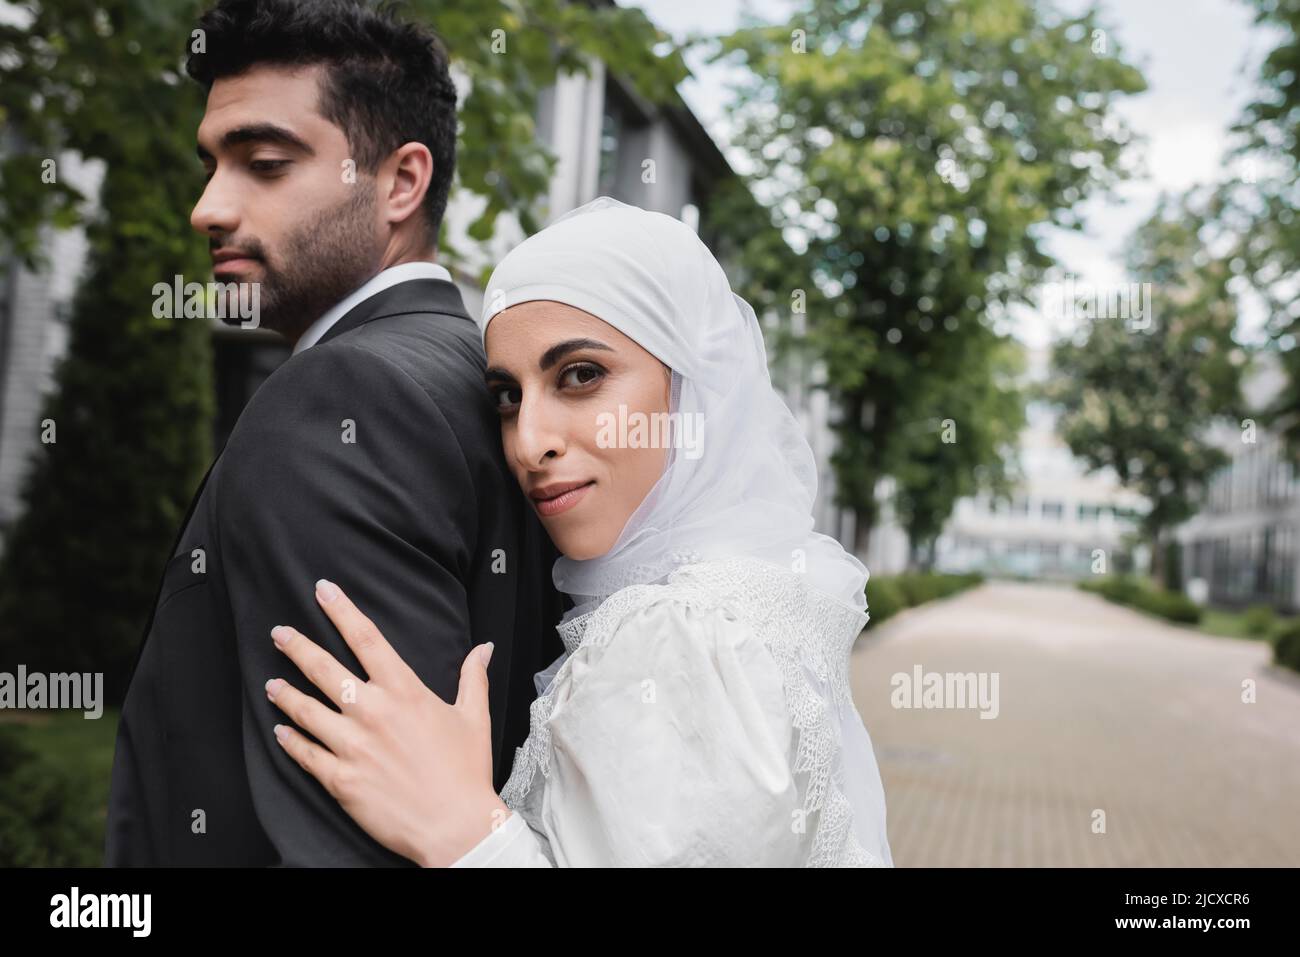 muslim bride in hijab and wedding dress hugging groom Stock Photo